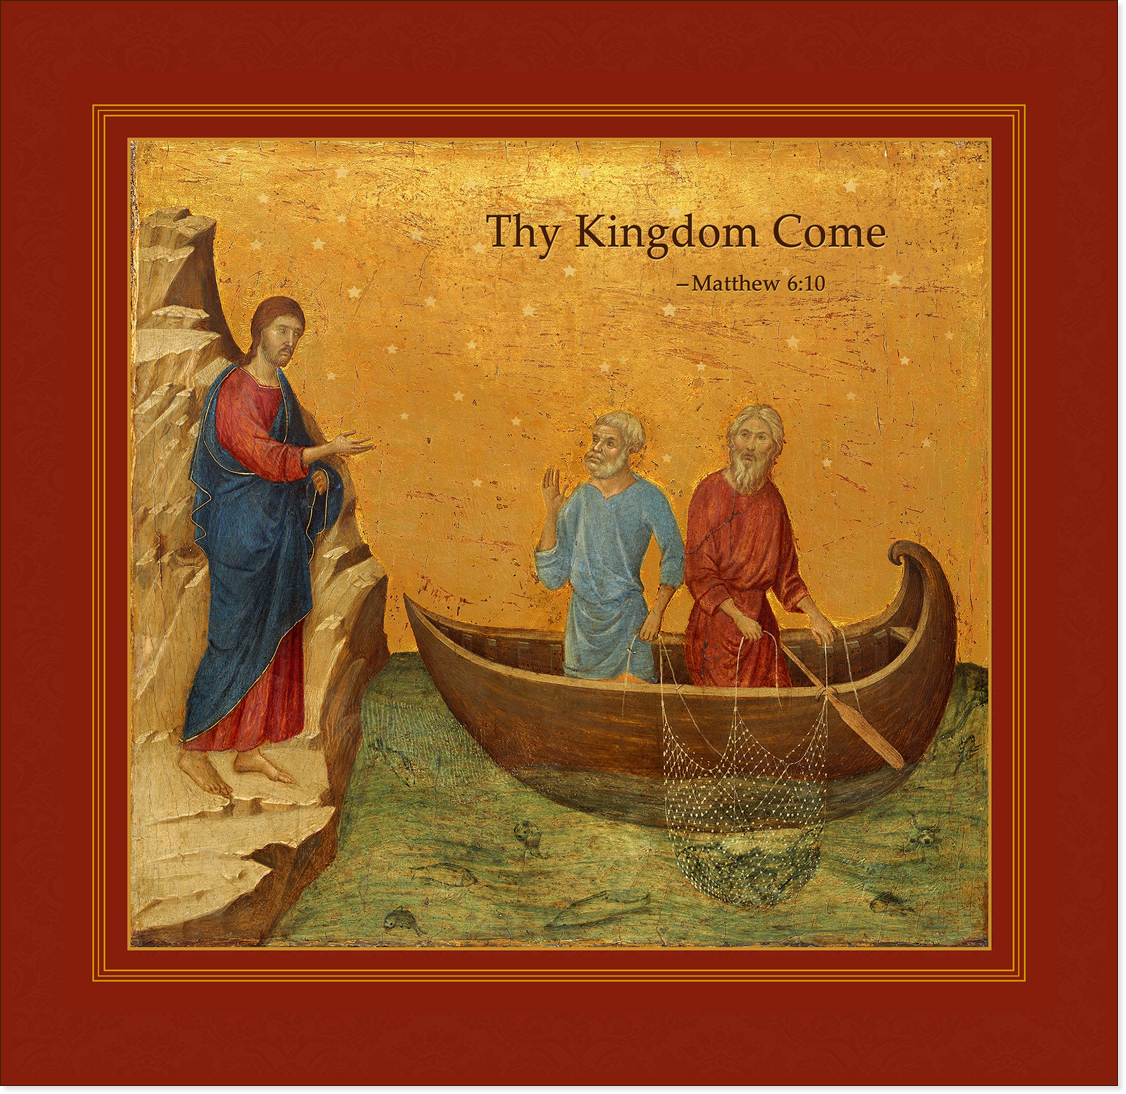 Christ with Fishermen -' Thy Kingdom Come'